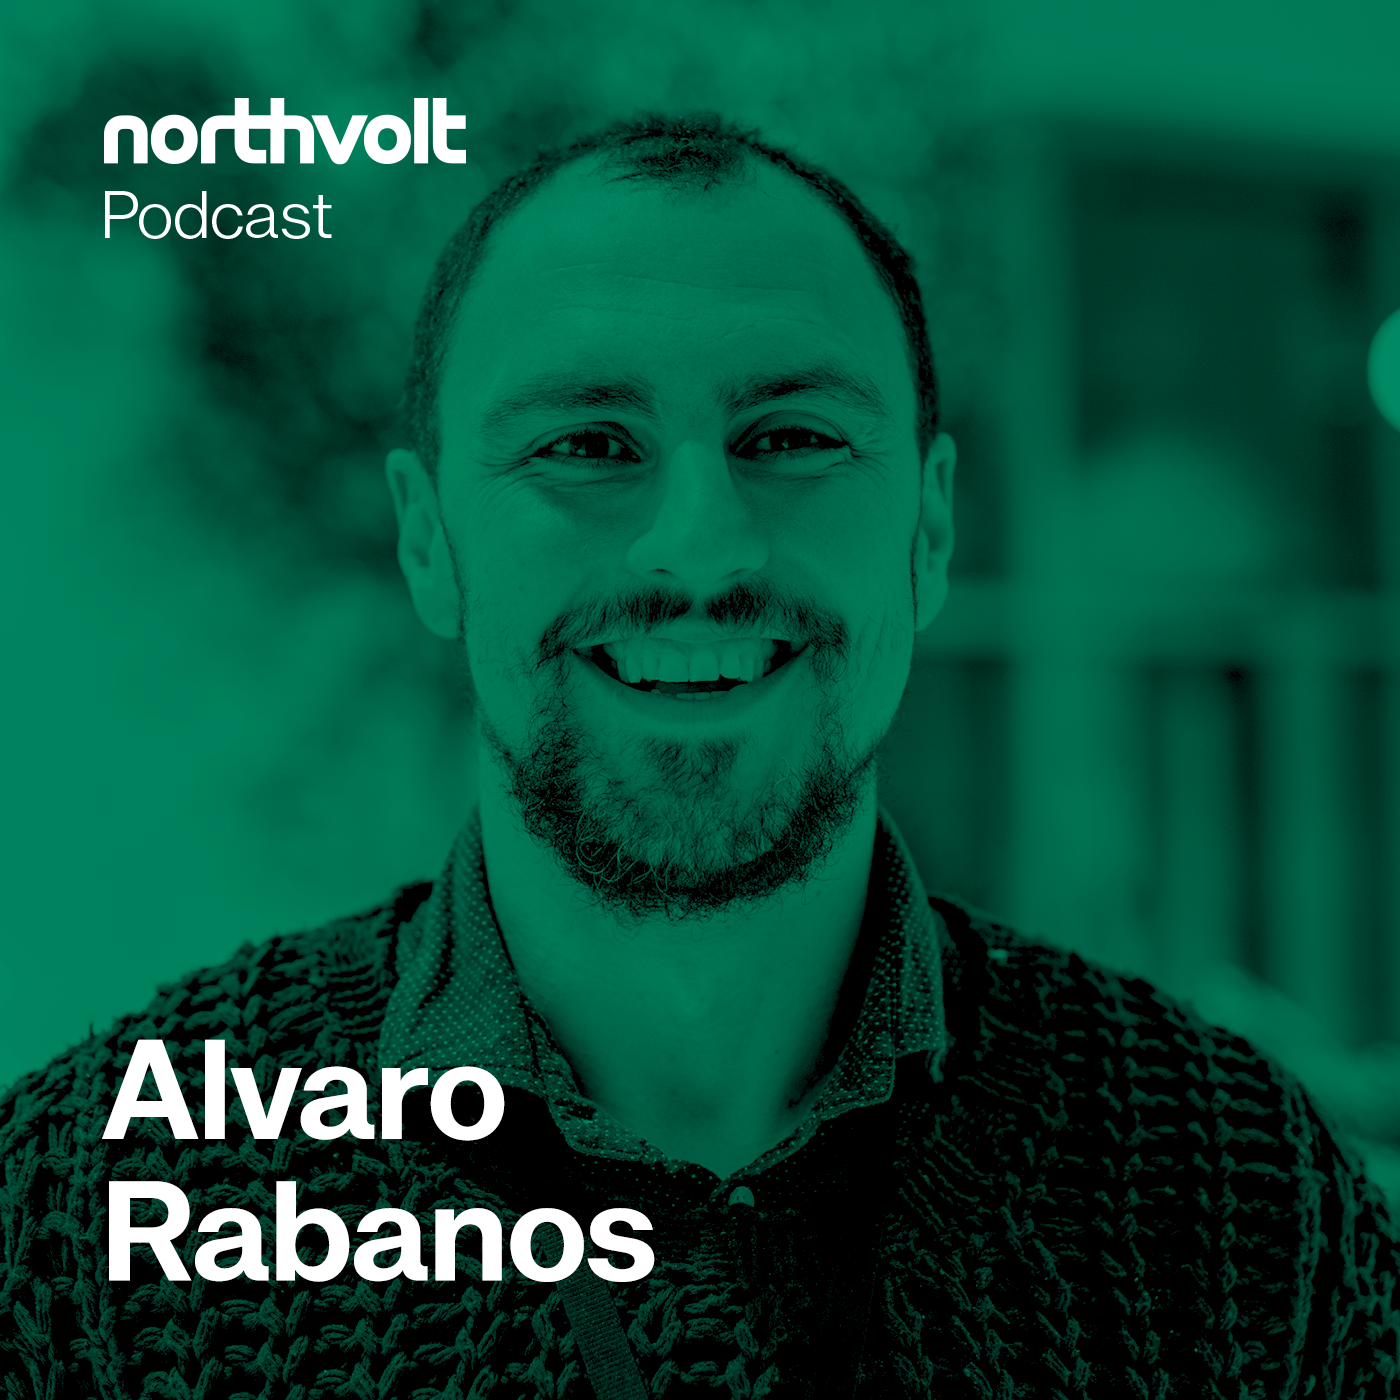 Challenge Accepted: Alvaro Rabanos